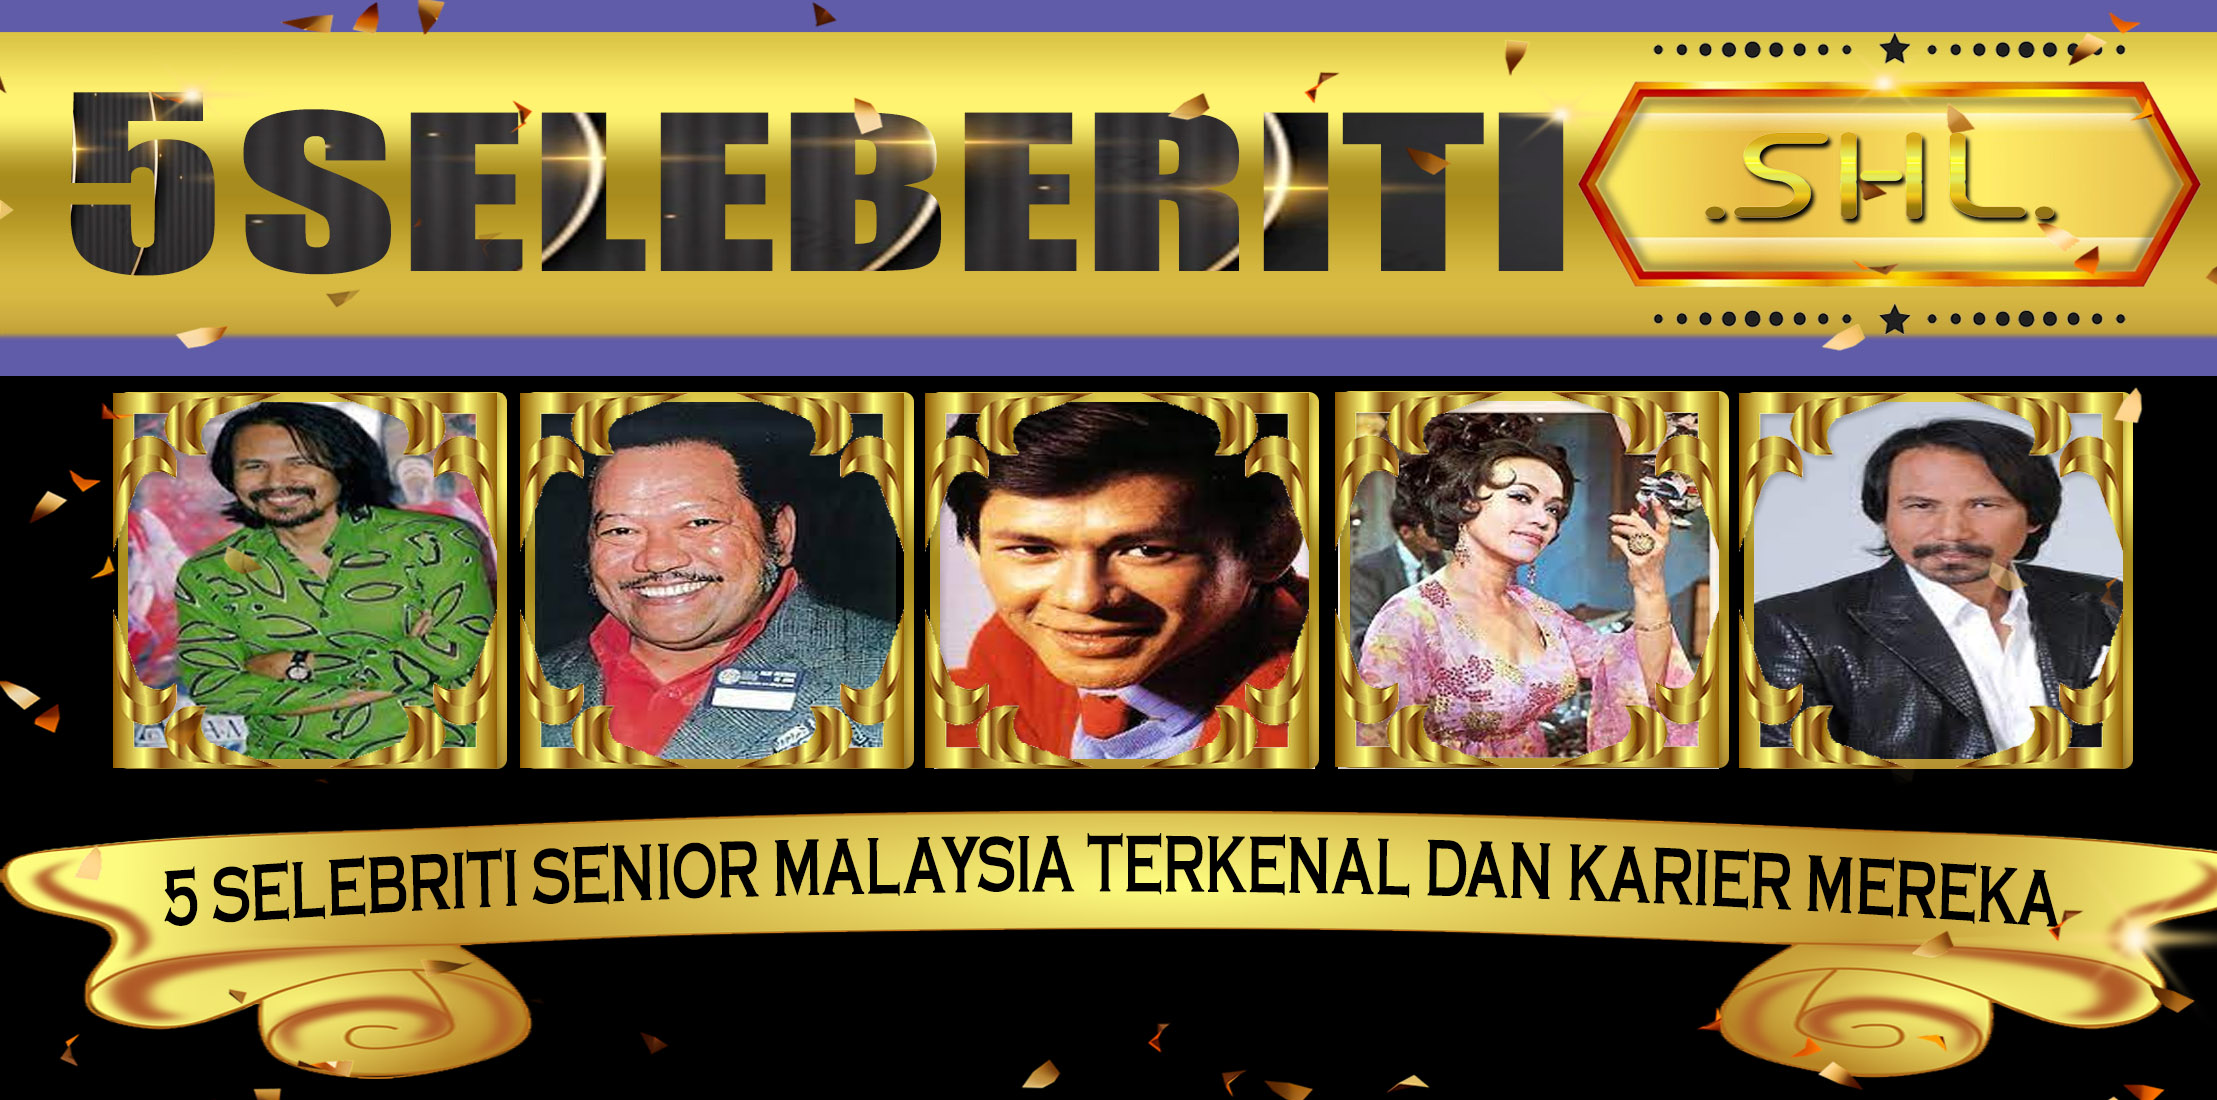 5 Selebriti Senior Malaysia